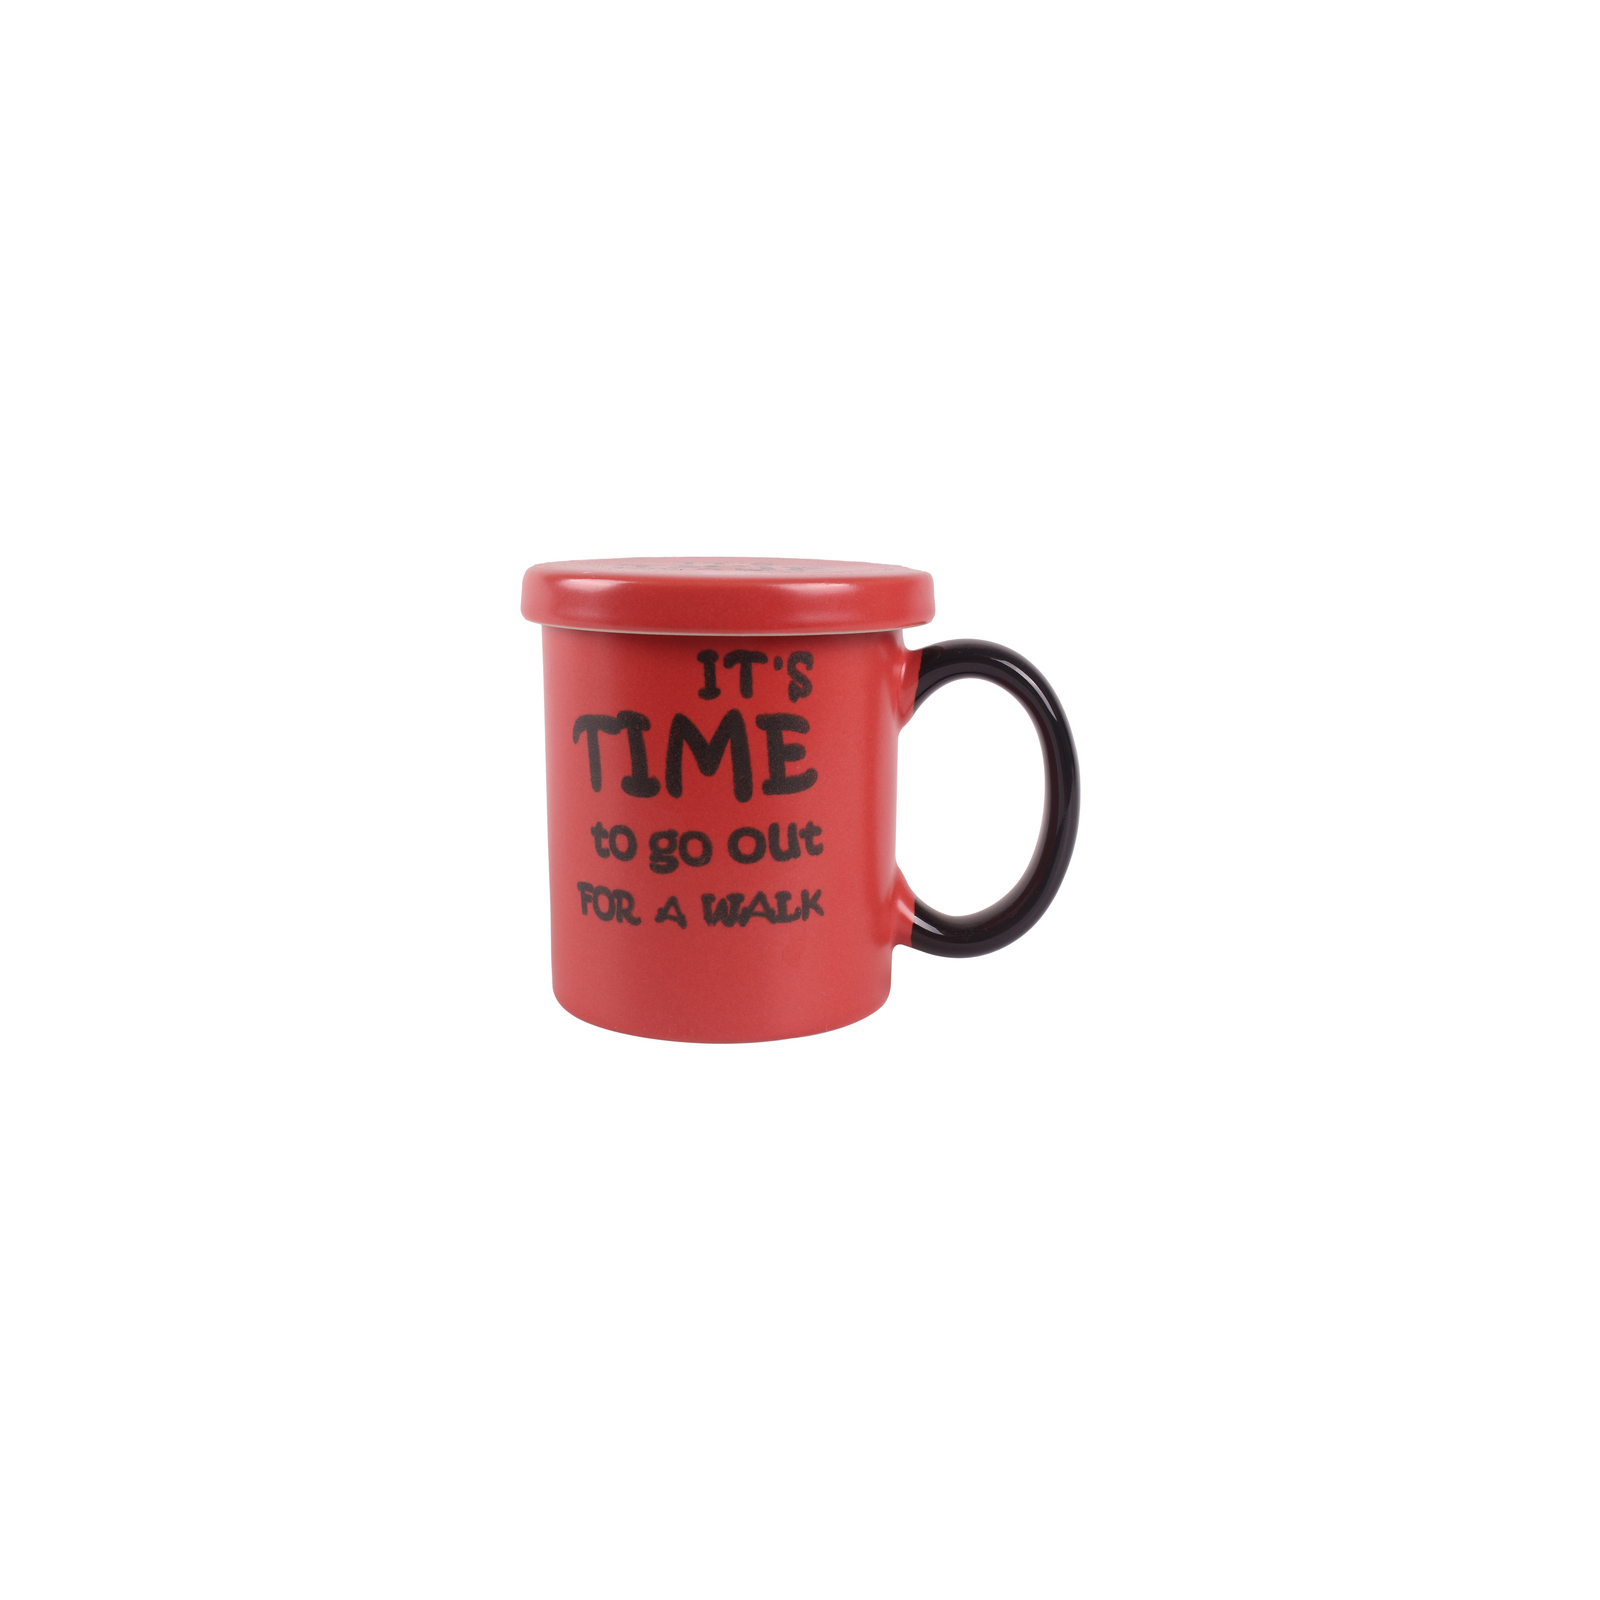 Чашка Limited Edition Time 310 мл Коралова (HTK-050)